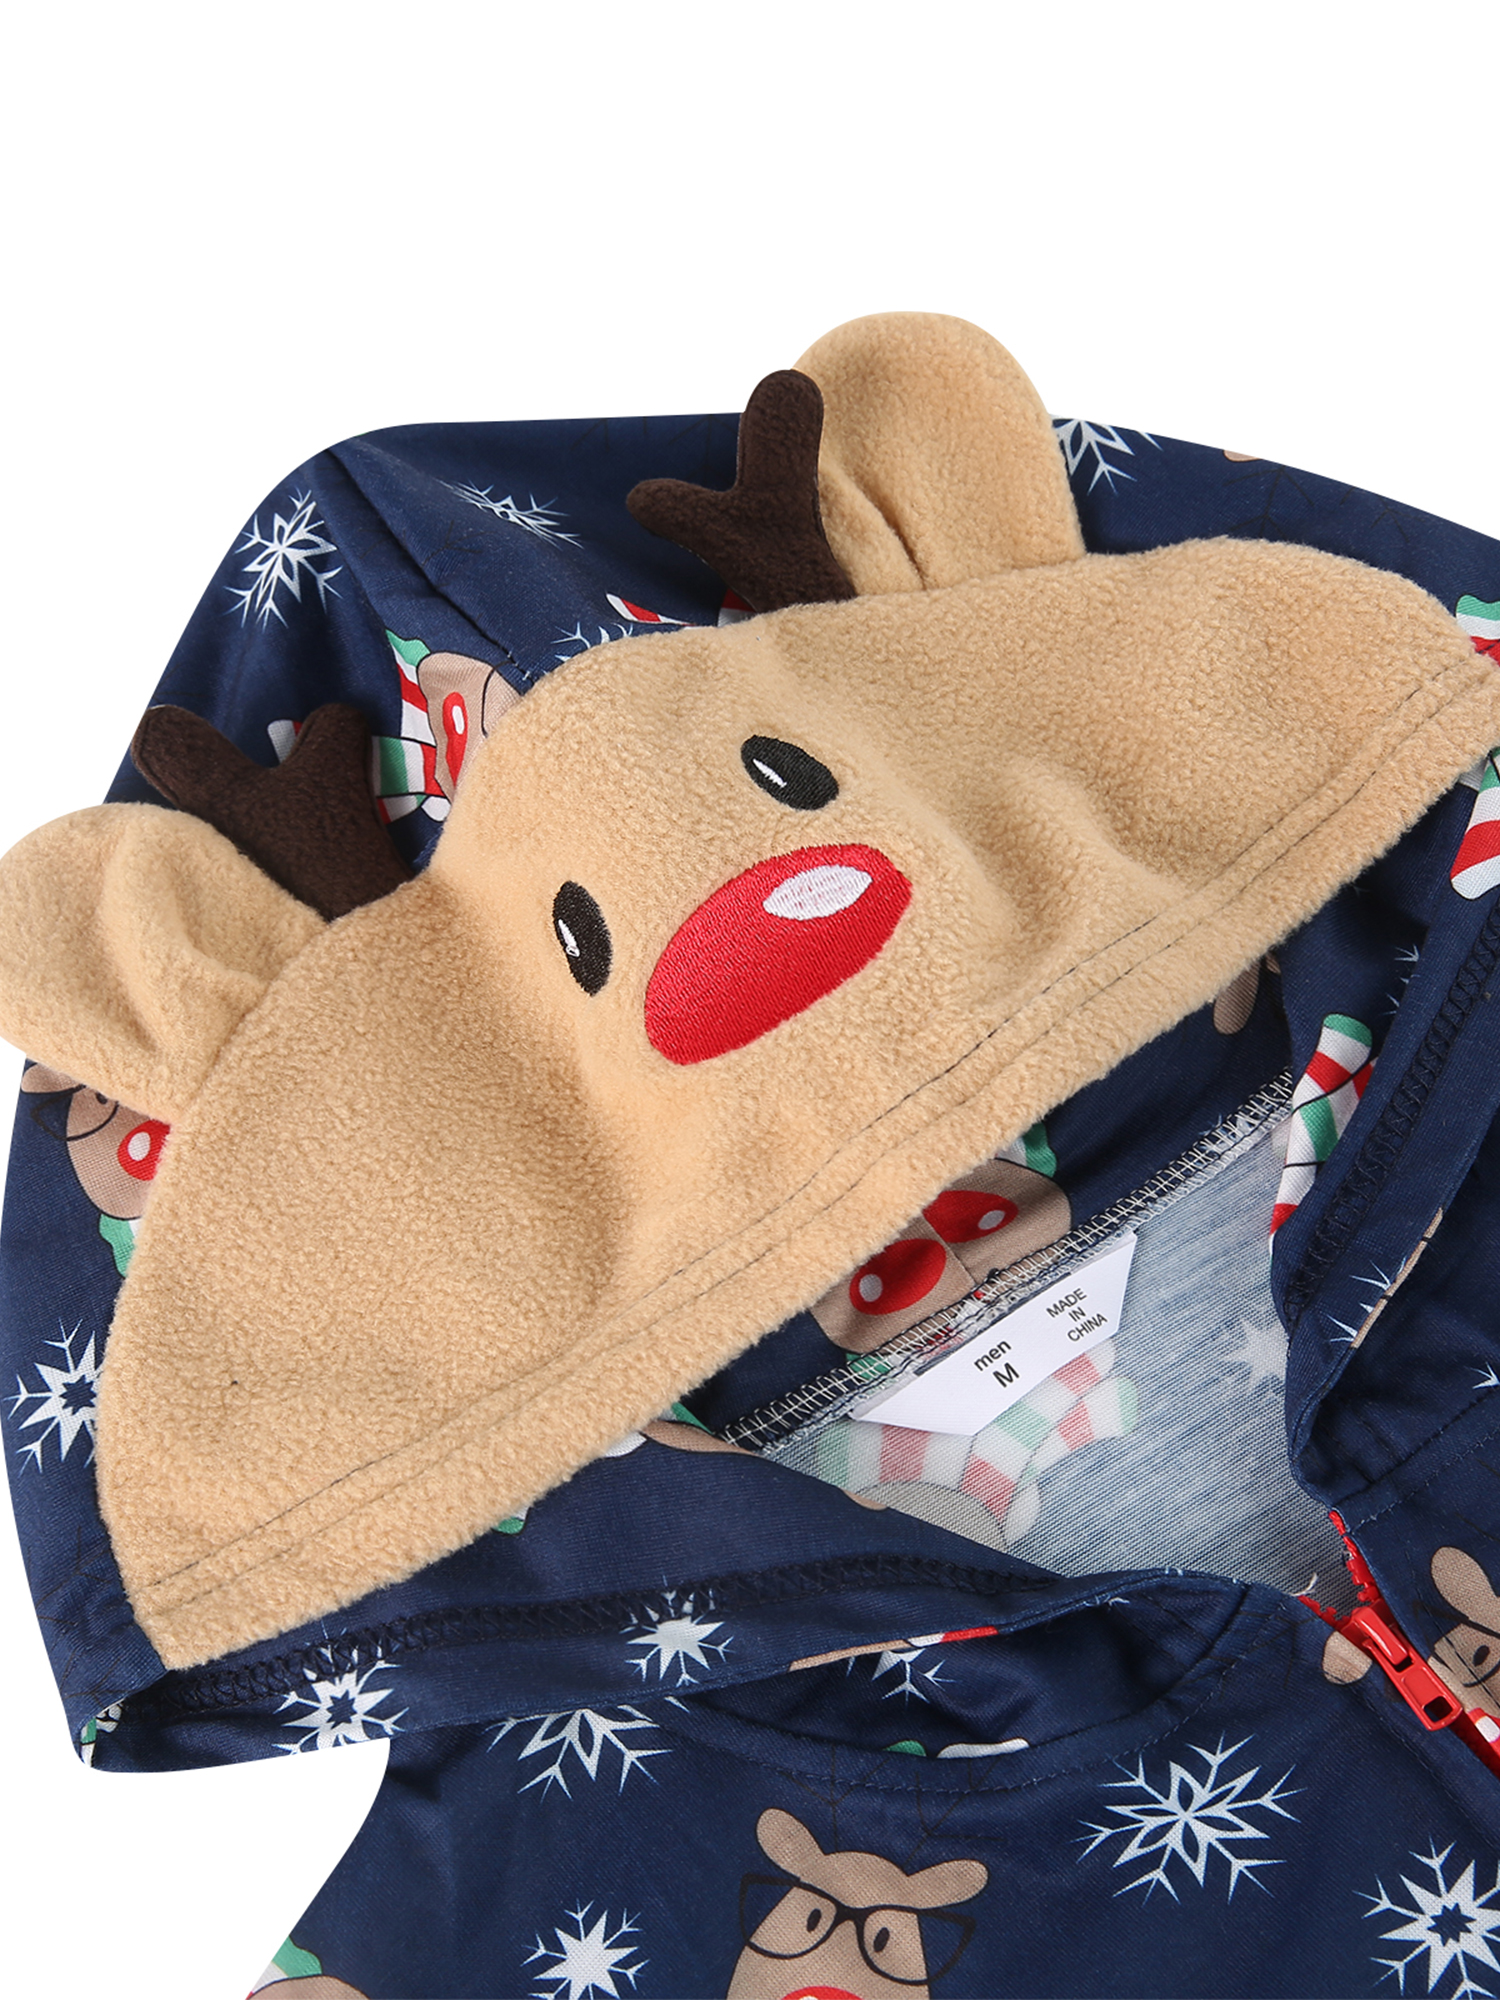 Shuttle tree Family Christmas Matching Pajamas Cartoon Deer Hooded Onesies Xmas One-Pieces Sleepwear Adult Kids Baby - image 4 of 7